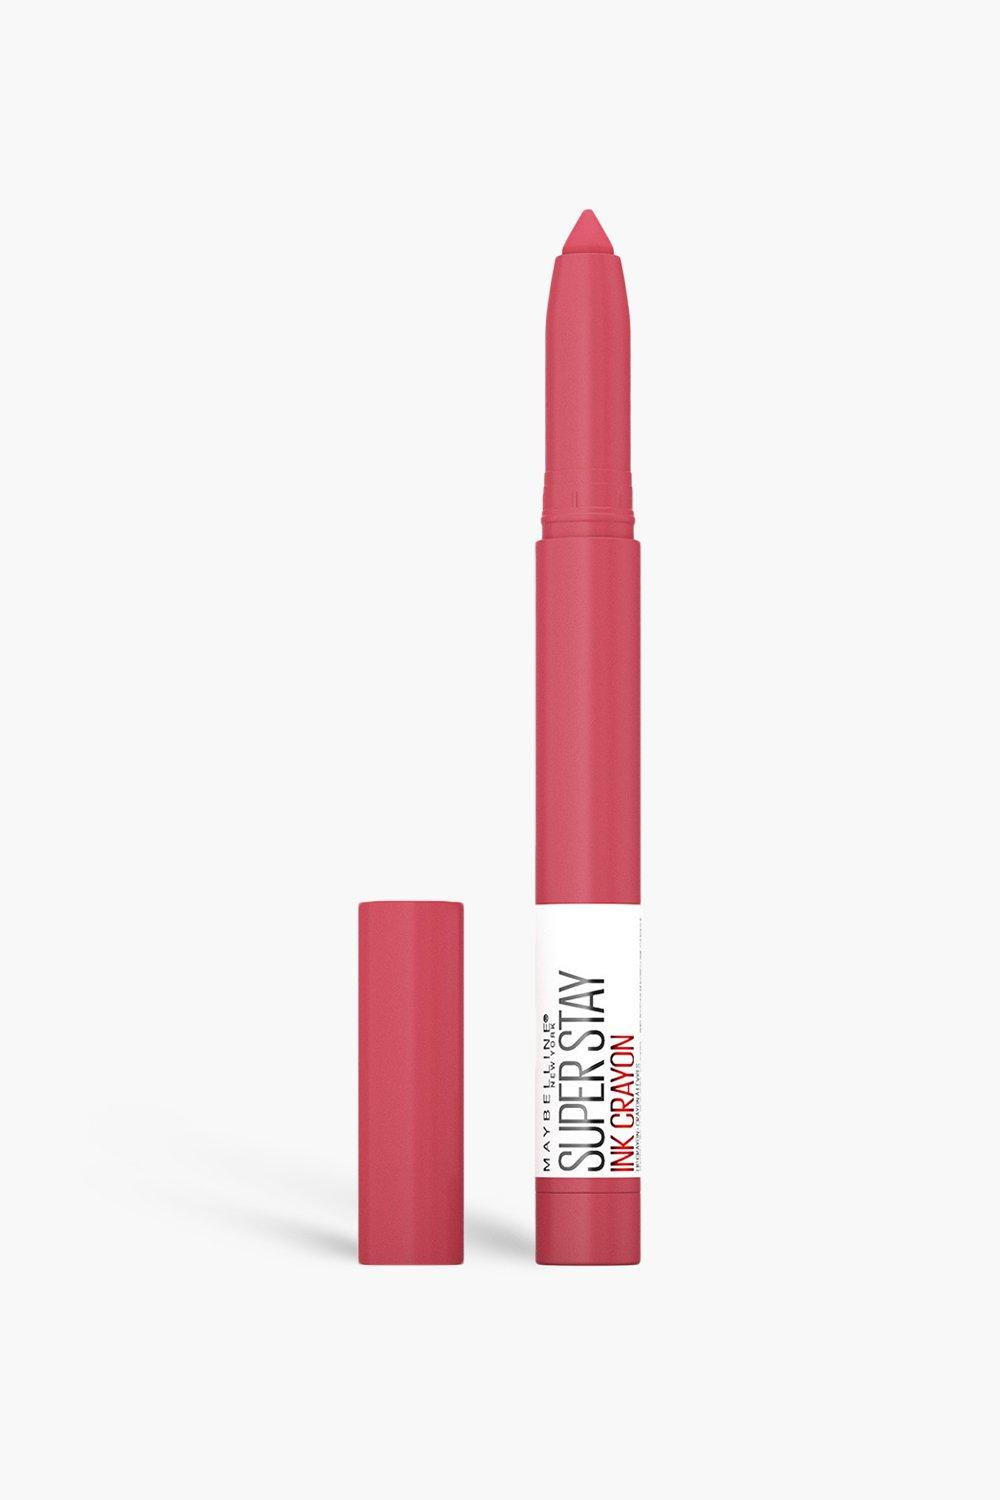 Maybelline Superstay Matte Crayon Lipstick, 85 Change Is Good